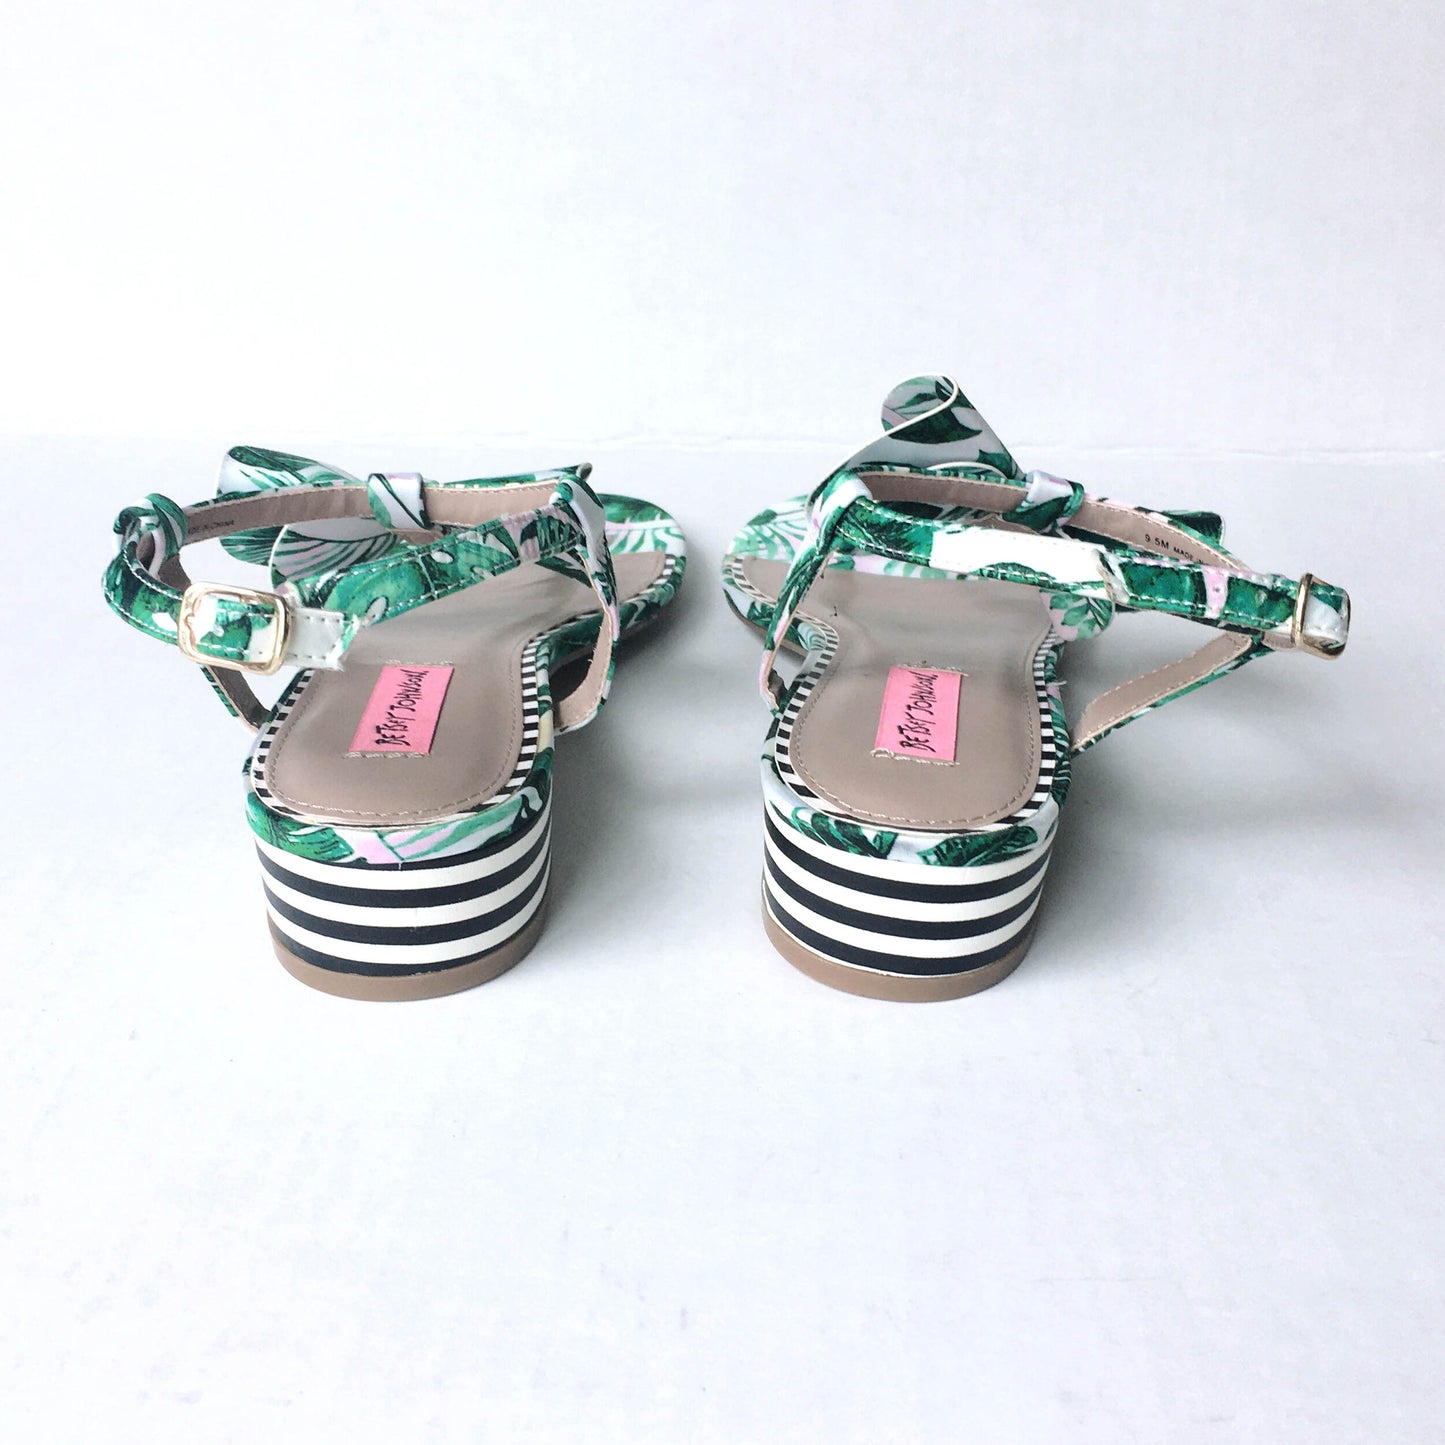 Betsey Johnson tropical Austen sandal - size 9.5